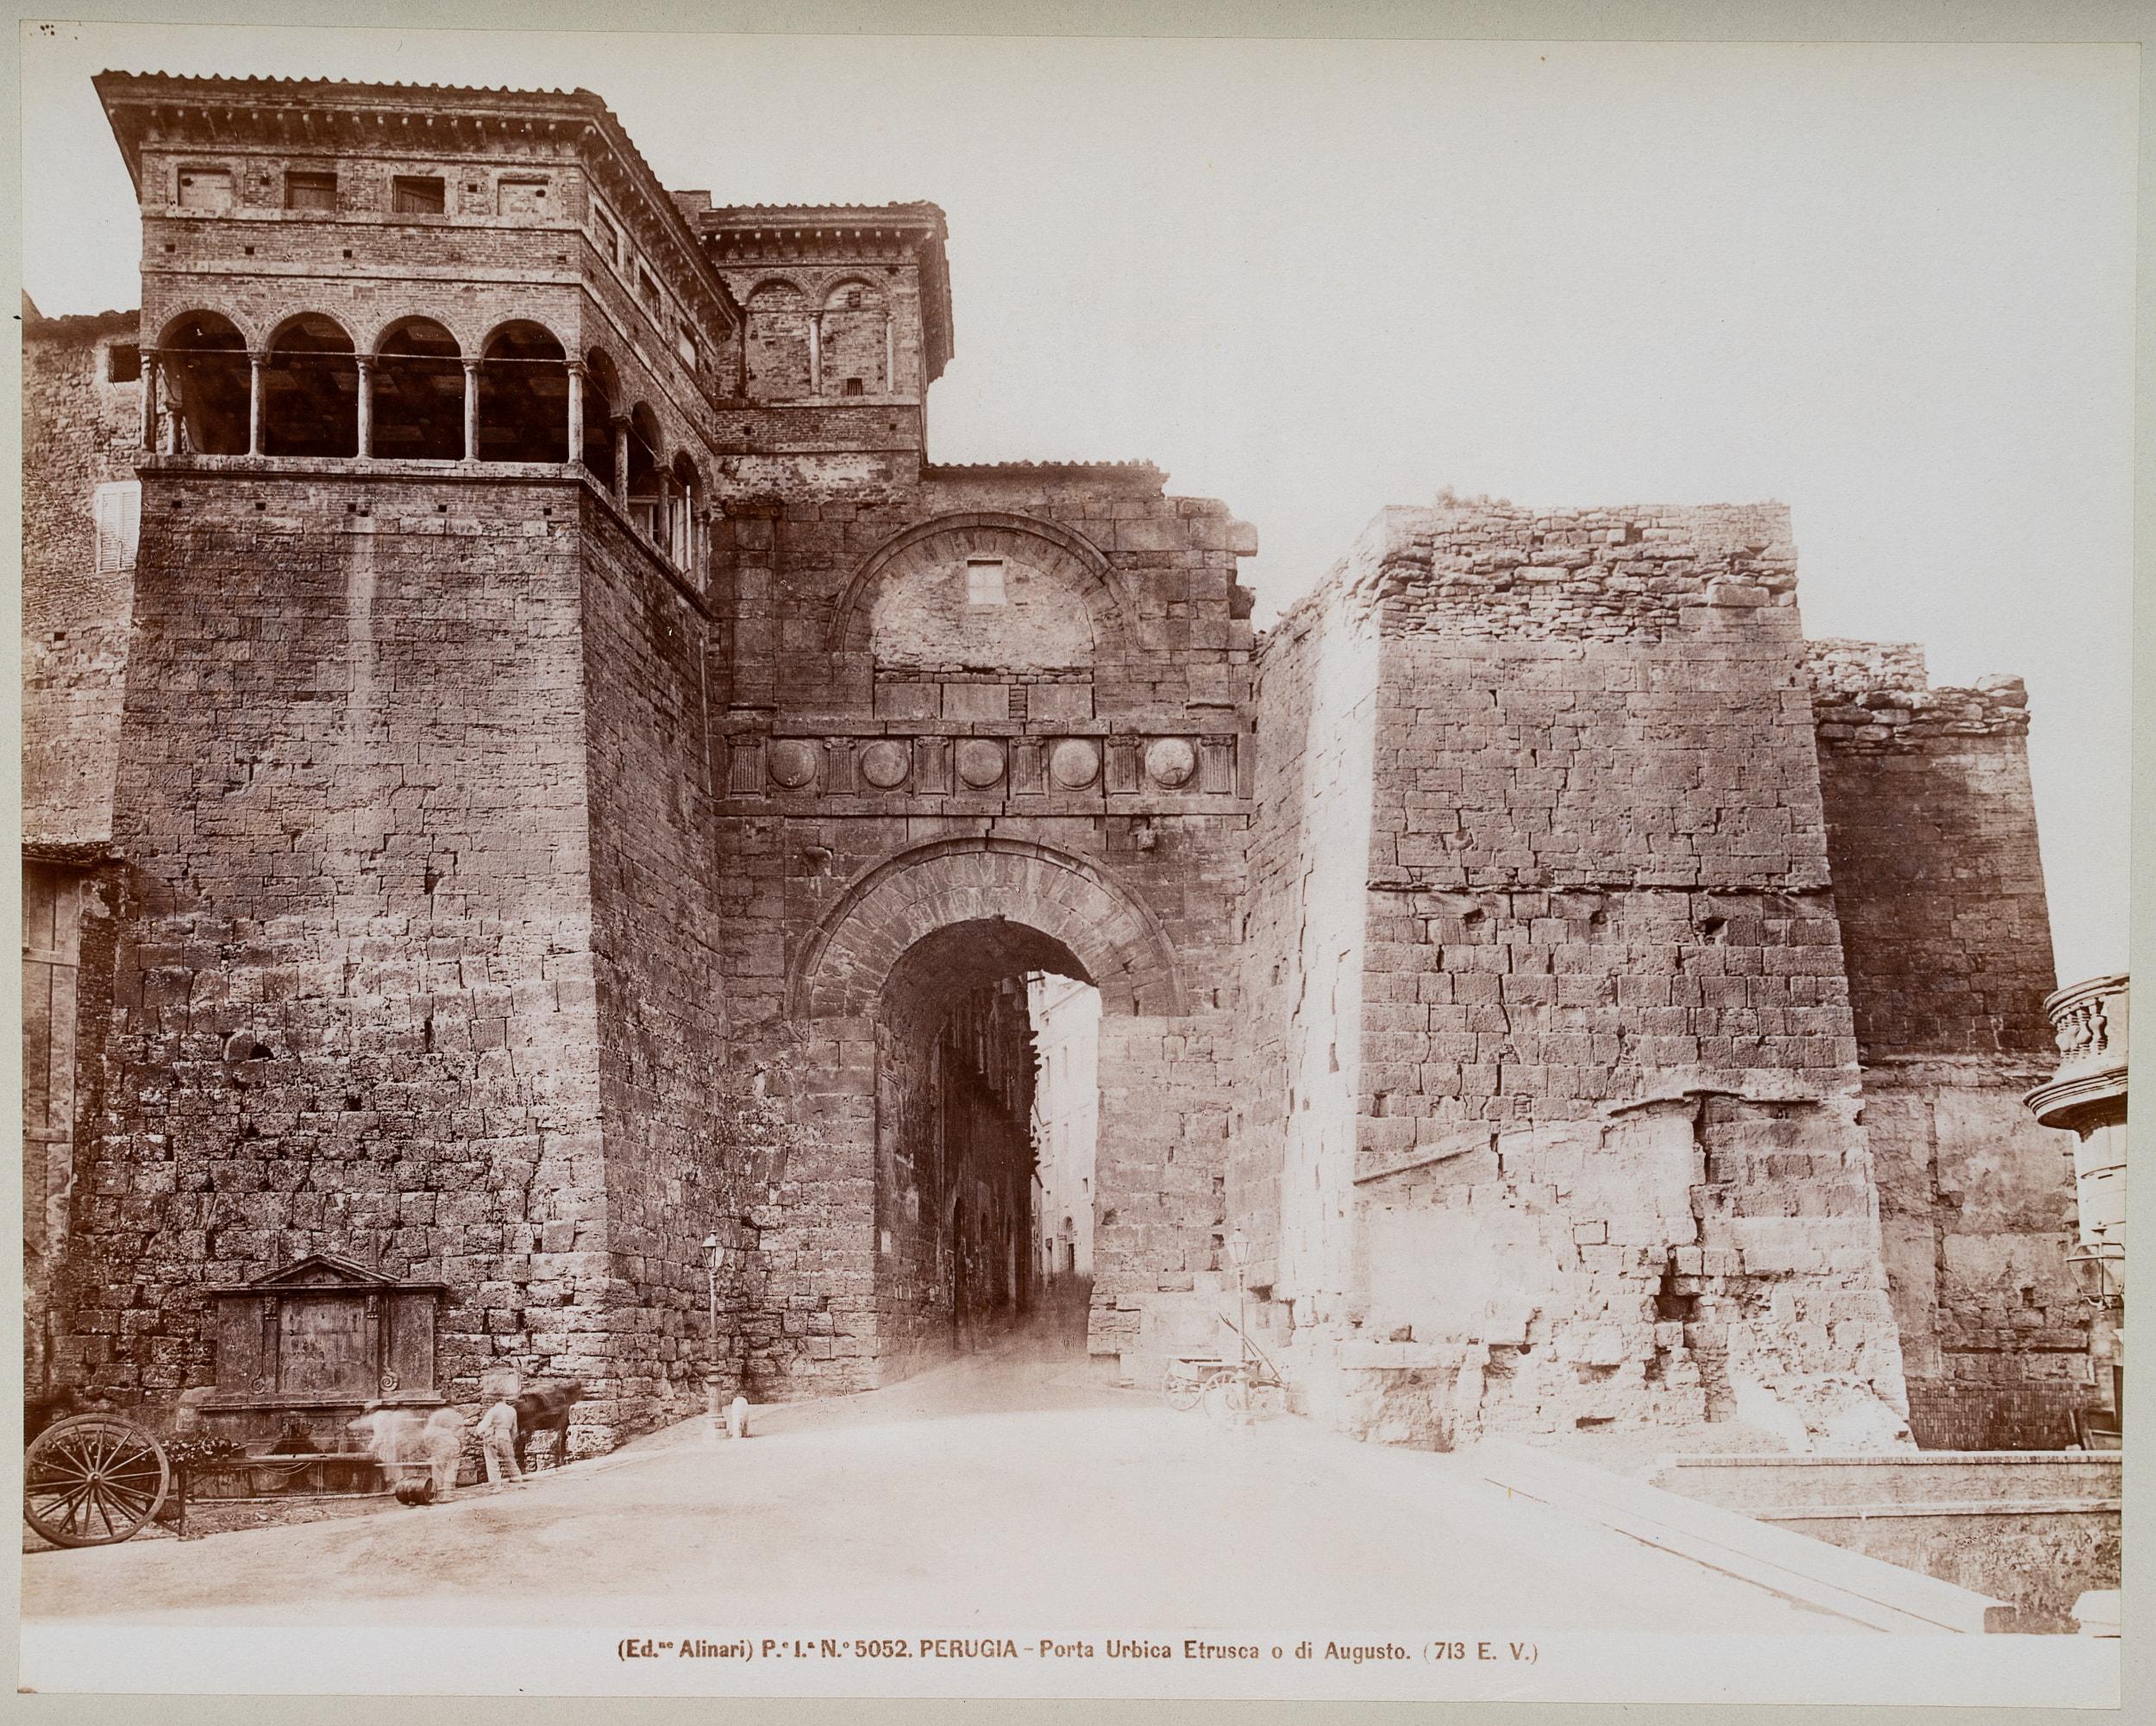 Porta Urbica Etrusca oder von Augustus, Perugia – Photograph von Fratelli Alinari